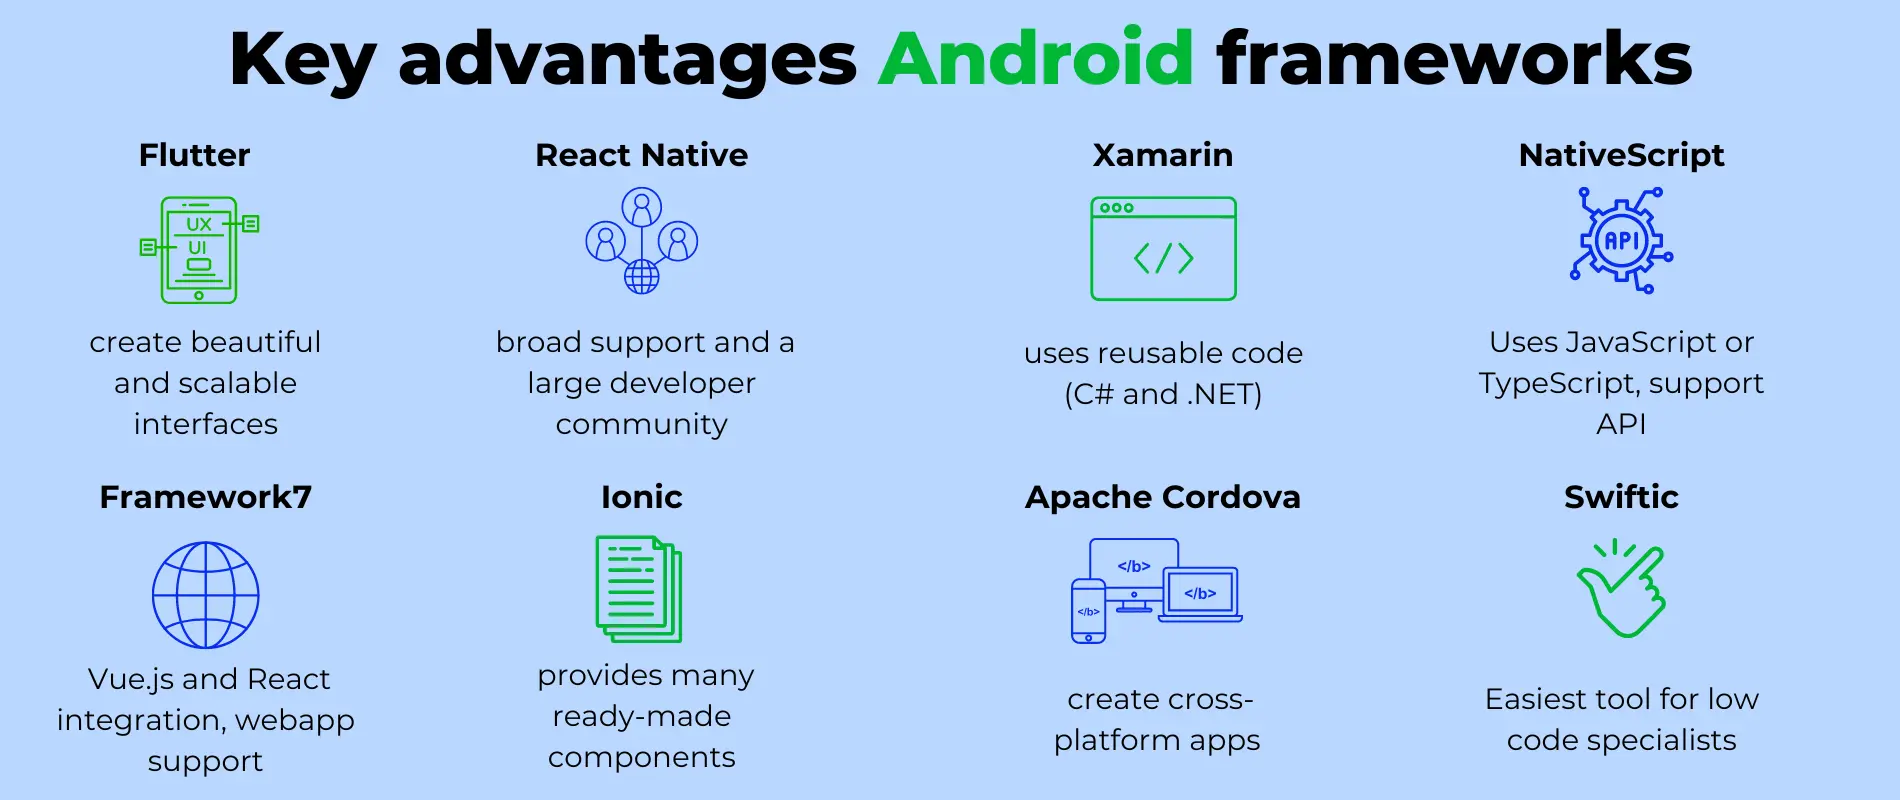 Advantages of Android frameworks